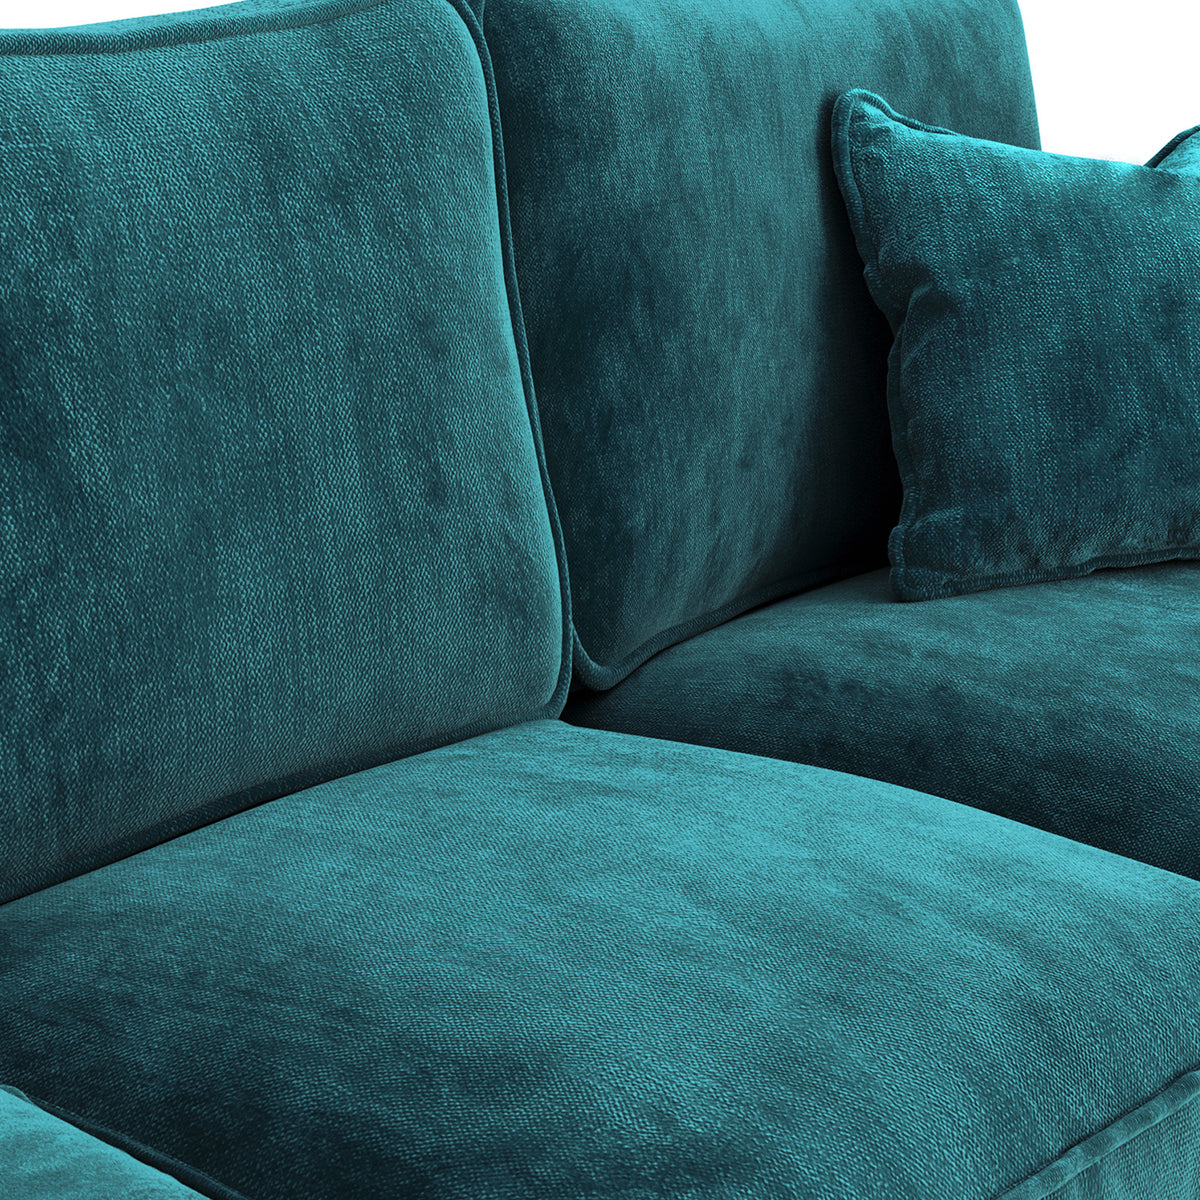 Arthur Emerald Green Chaise Sofa from Roseland Furniture